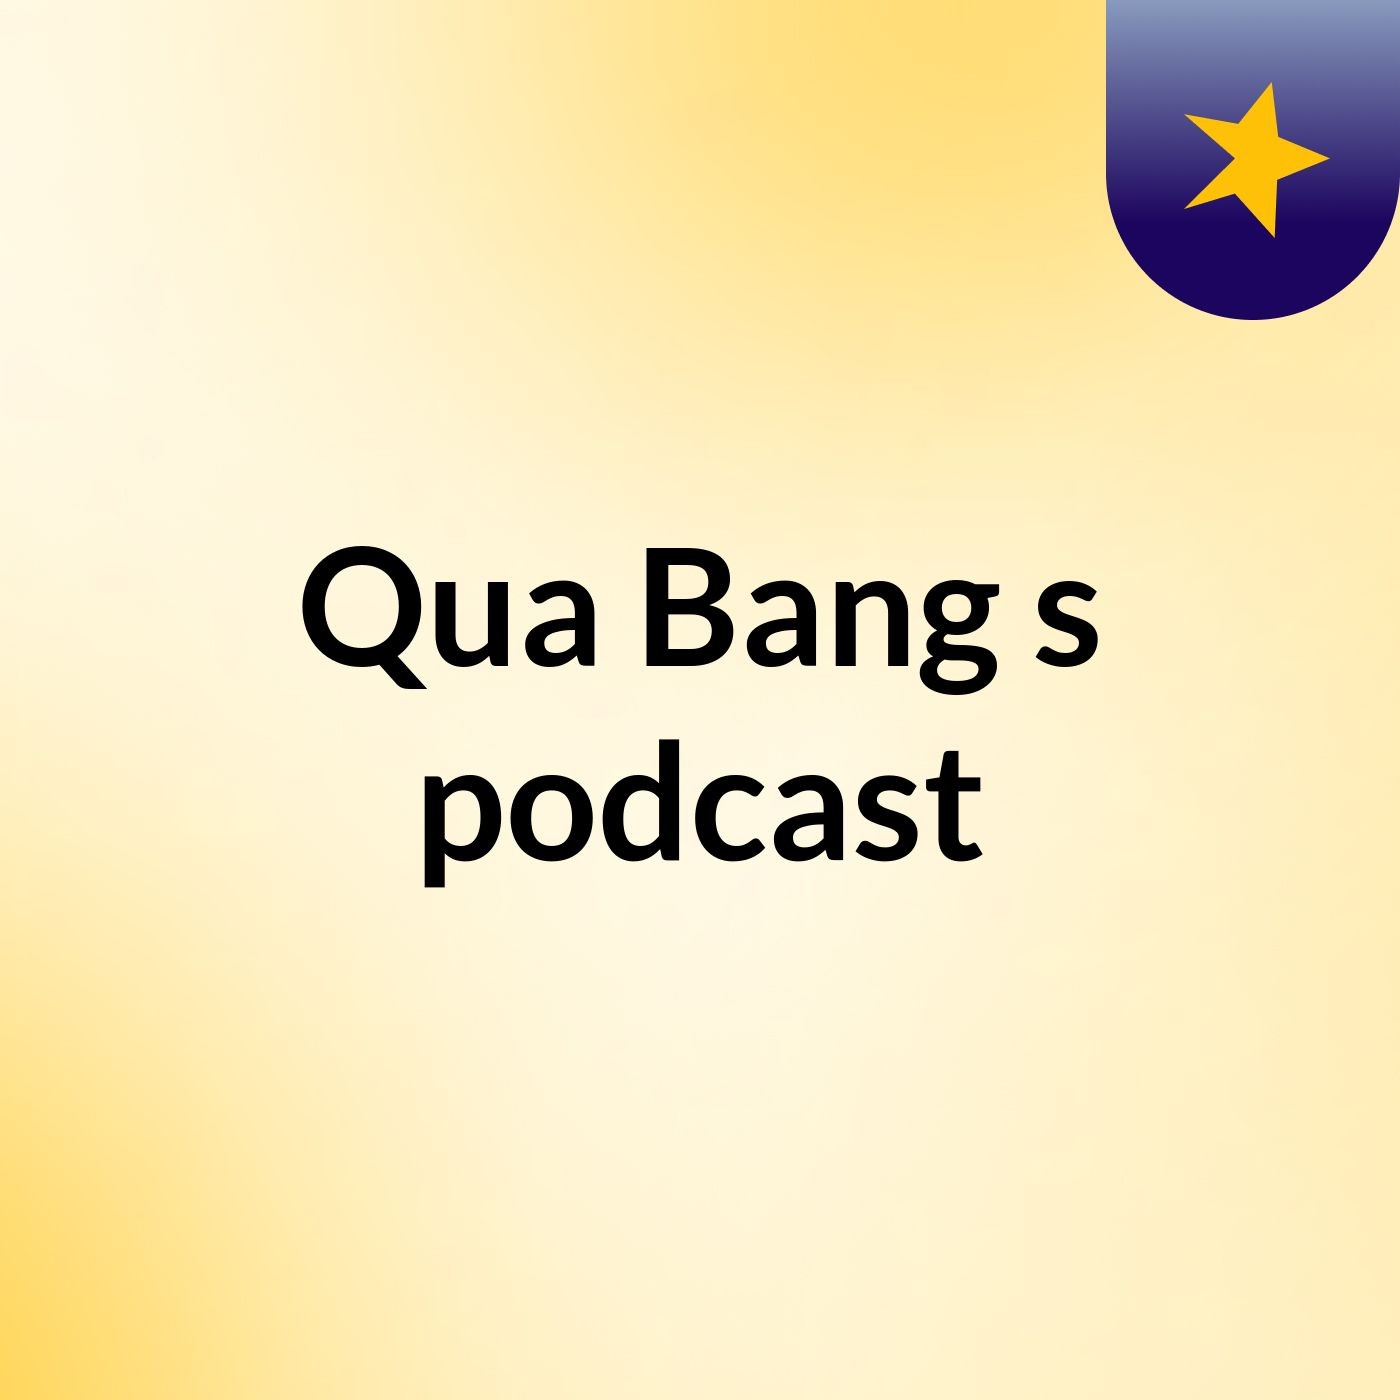 Qua Bang's podcast